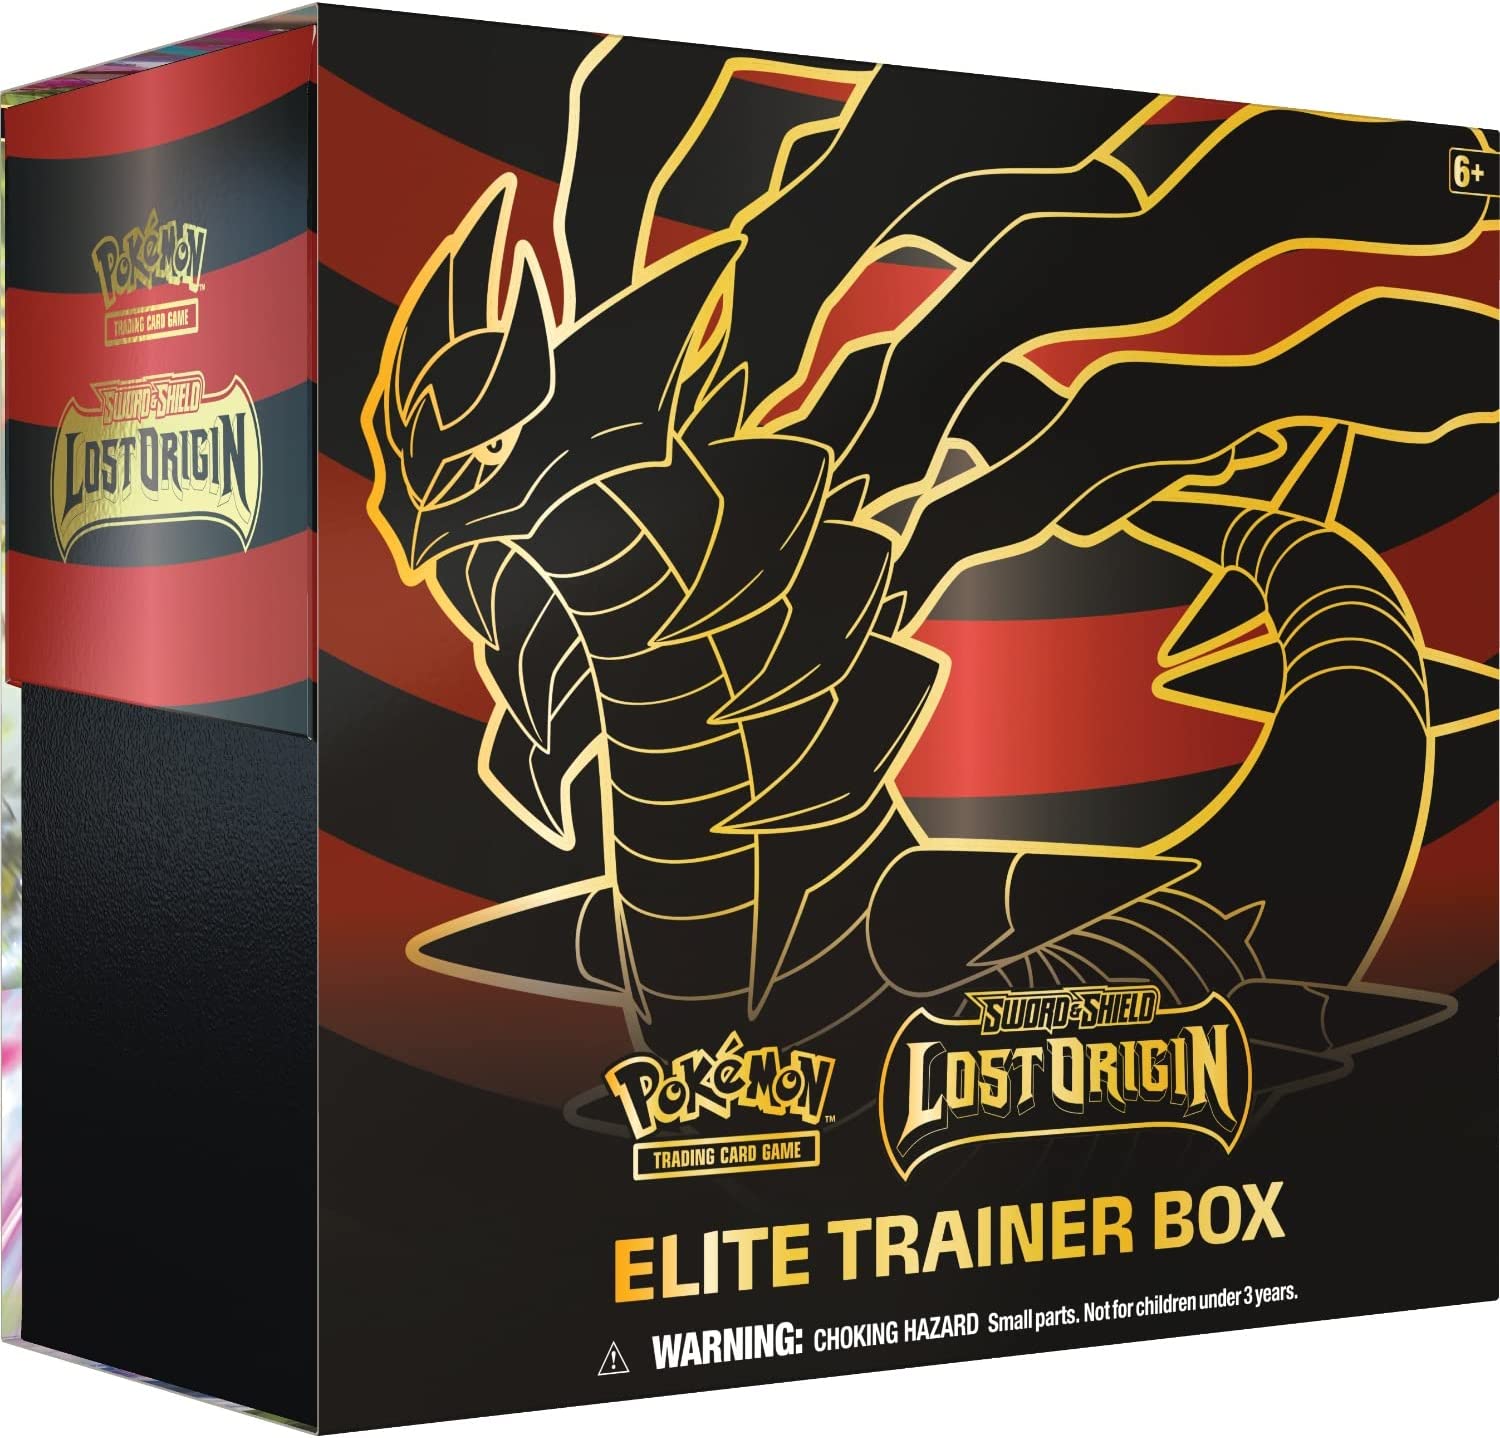 Pokemon Trading Card Game: Sword & Shield - Lost Origin Elite Trainer Box $32.99 + Free Shipping